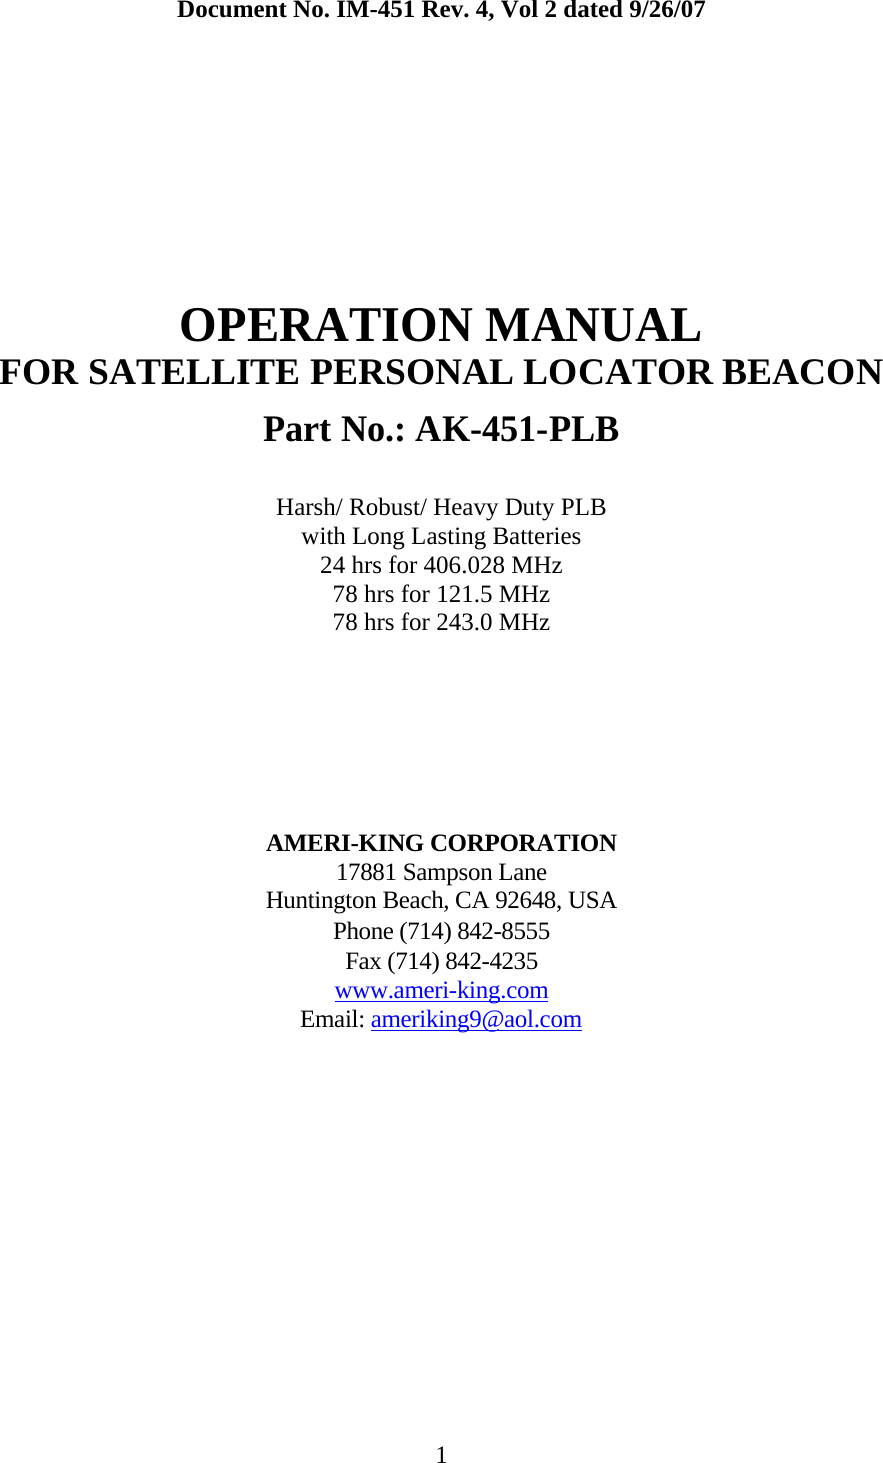  1 Document No. IM-451 Rev. 4, Vol 2 dated 9/26/07       OPERATION MANUAL FOR SATELLITE PERSONAL LOCATOR BEACON  Part No.: AK-451-PLB  Harsh/ Robust/ Heavy Duty PLB with Long Lasting Batteries 24 hrs for 406.028 MHz 78 hrs for 121.5 MHz 78 hrs for 243.0 MHz       AMERI-KING CORPORATION 17881 Sampson Lane Huntington Beach, CA 92648, USA Phone (714) 842-8555 Fax (714) 842-4235  www.ameri-king.comEmail: ameriking9@aol.com